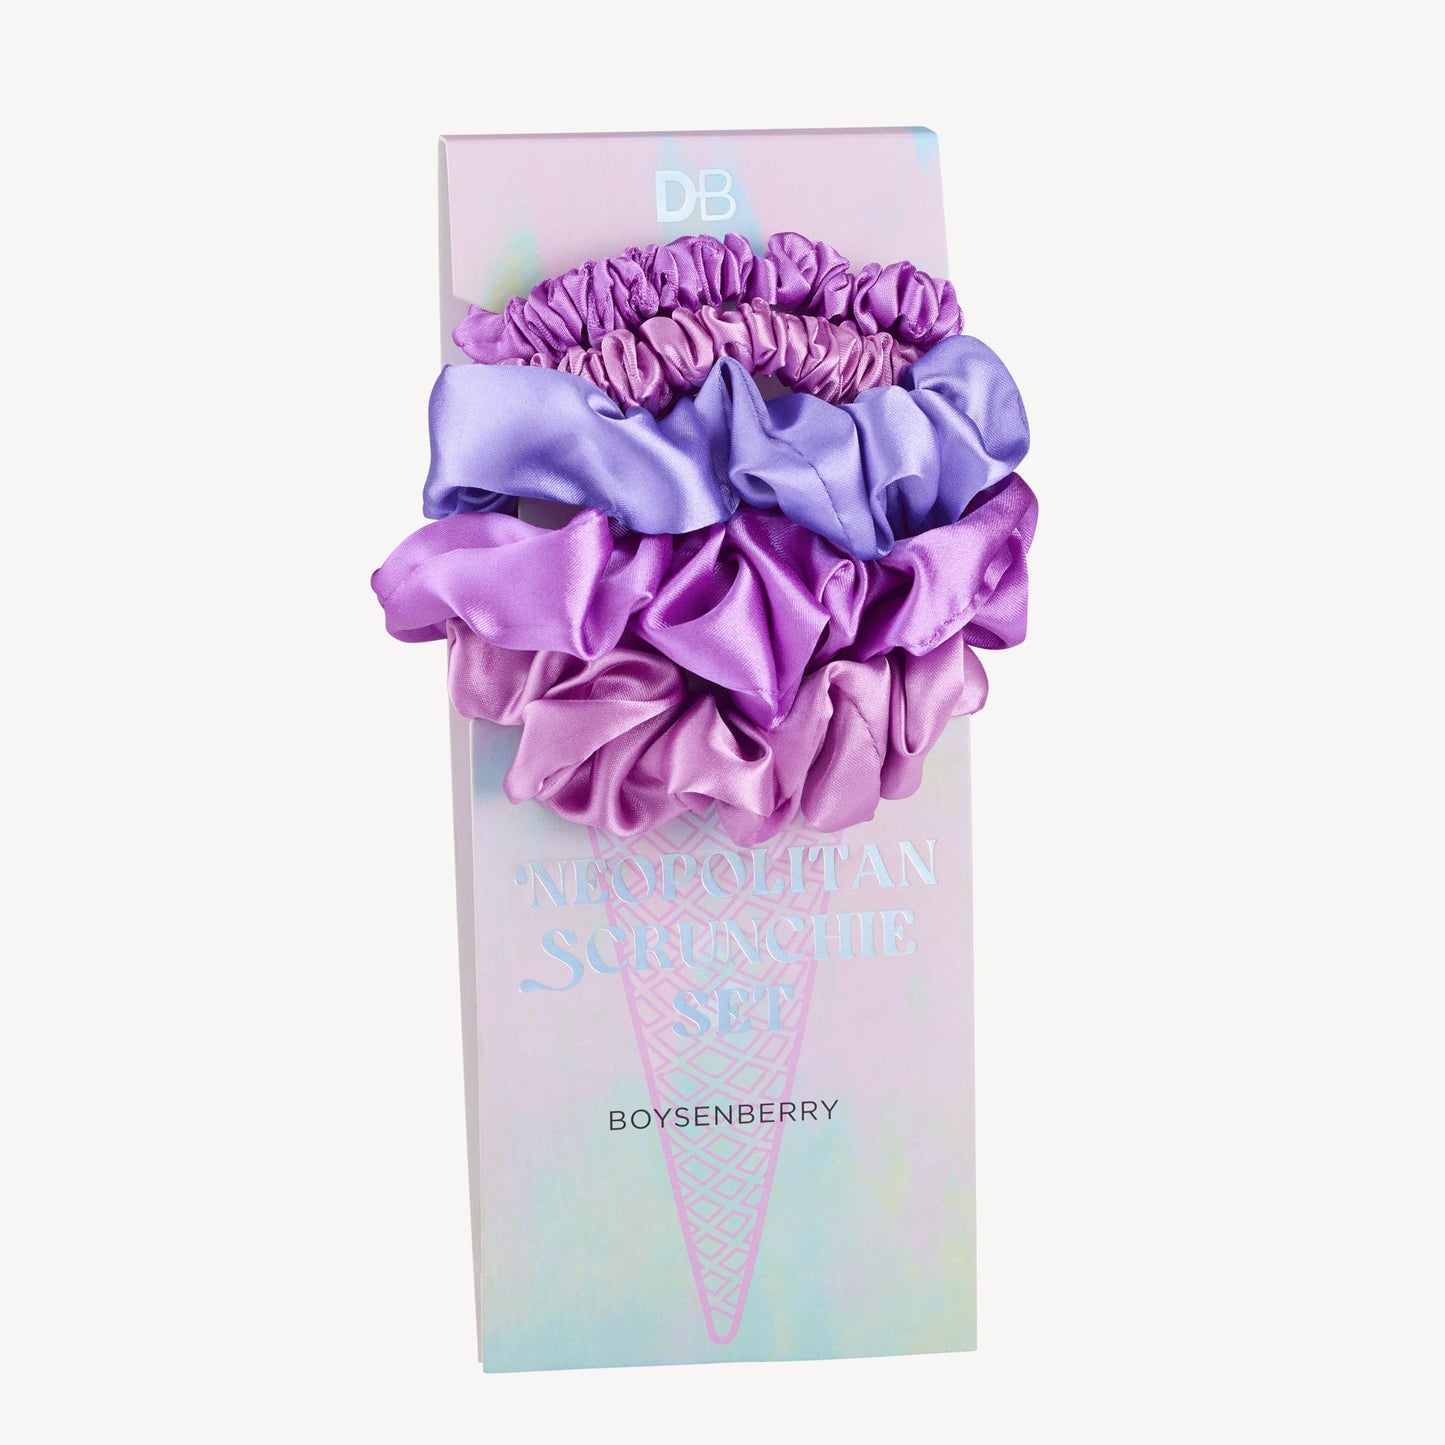 Neapolitan Scrunchie Set (Boysenberry) | DB Cosmetics | Thumbnail